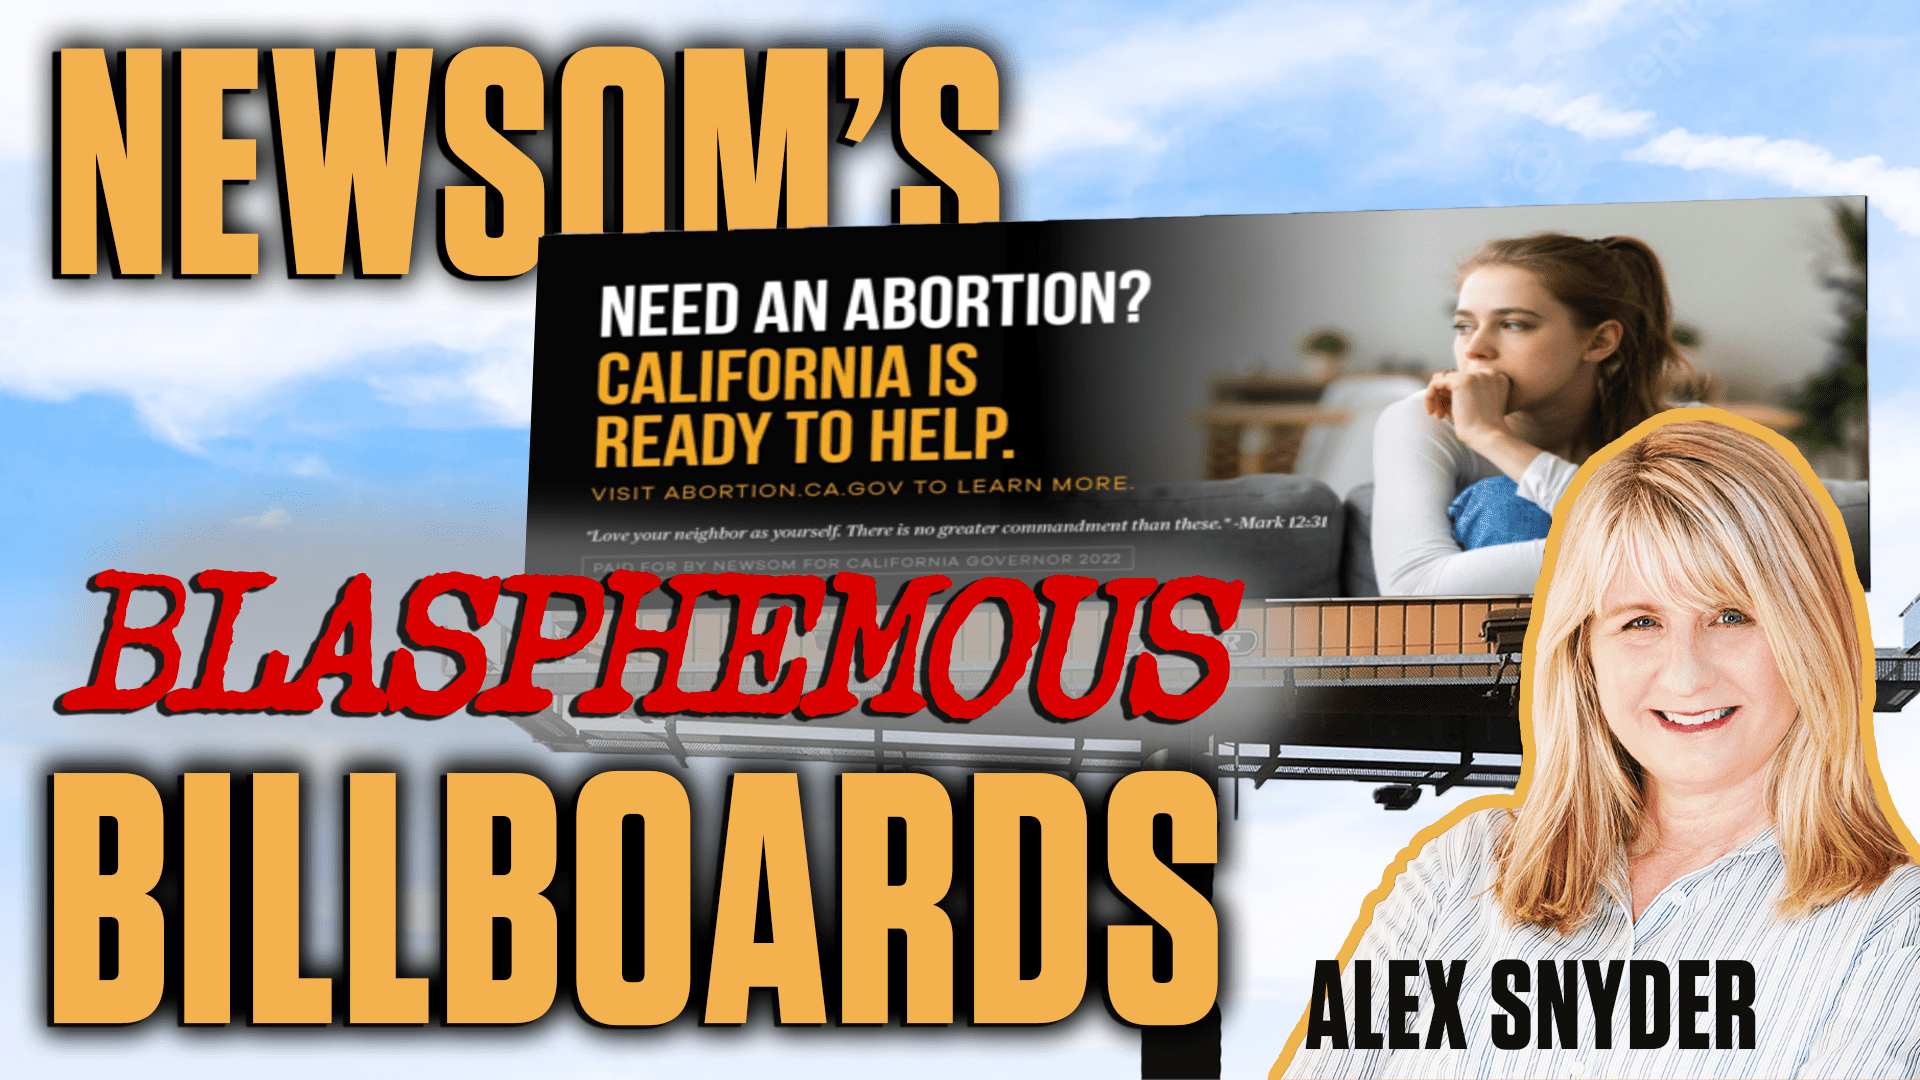 Coalition Responds to Newsom’s Blasphemous Billboards